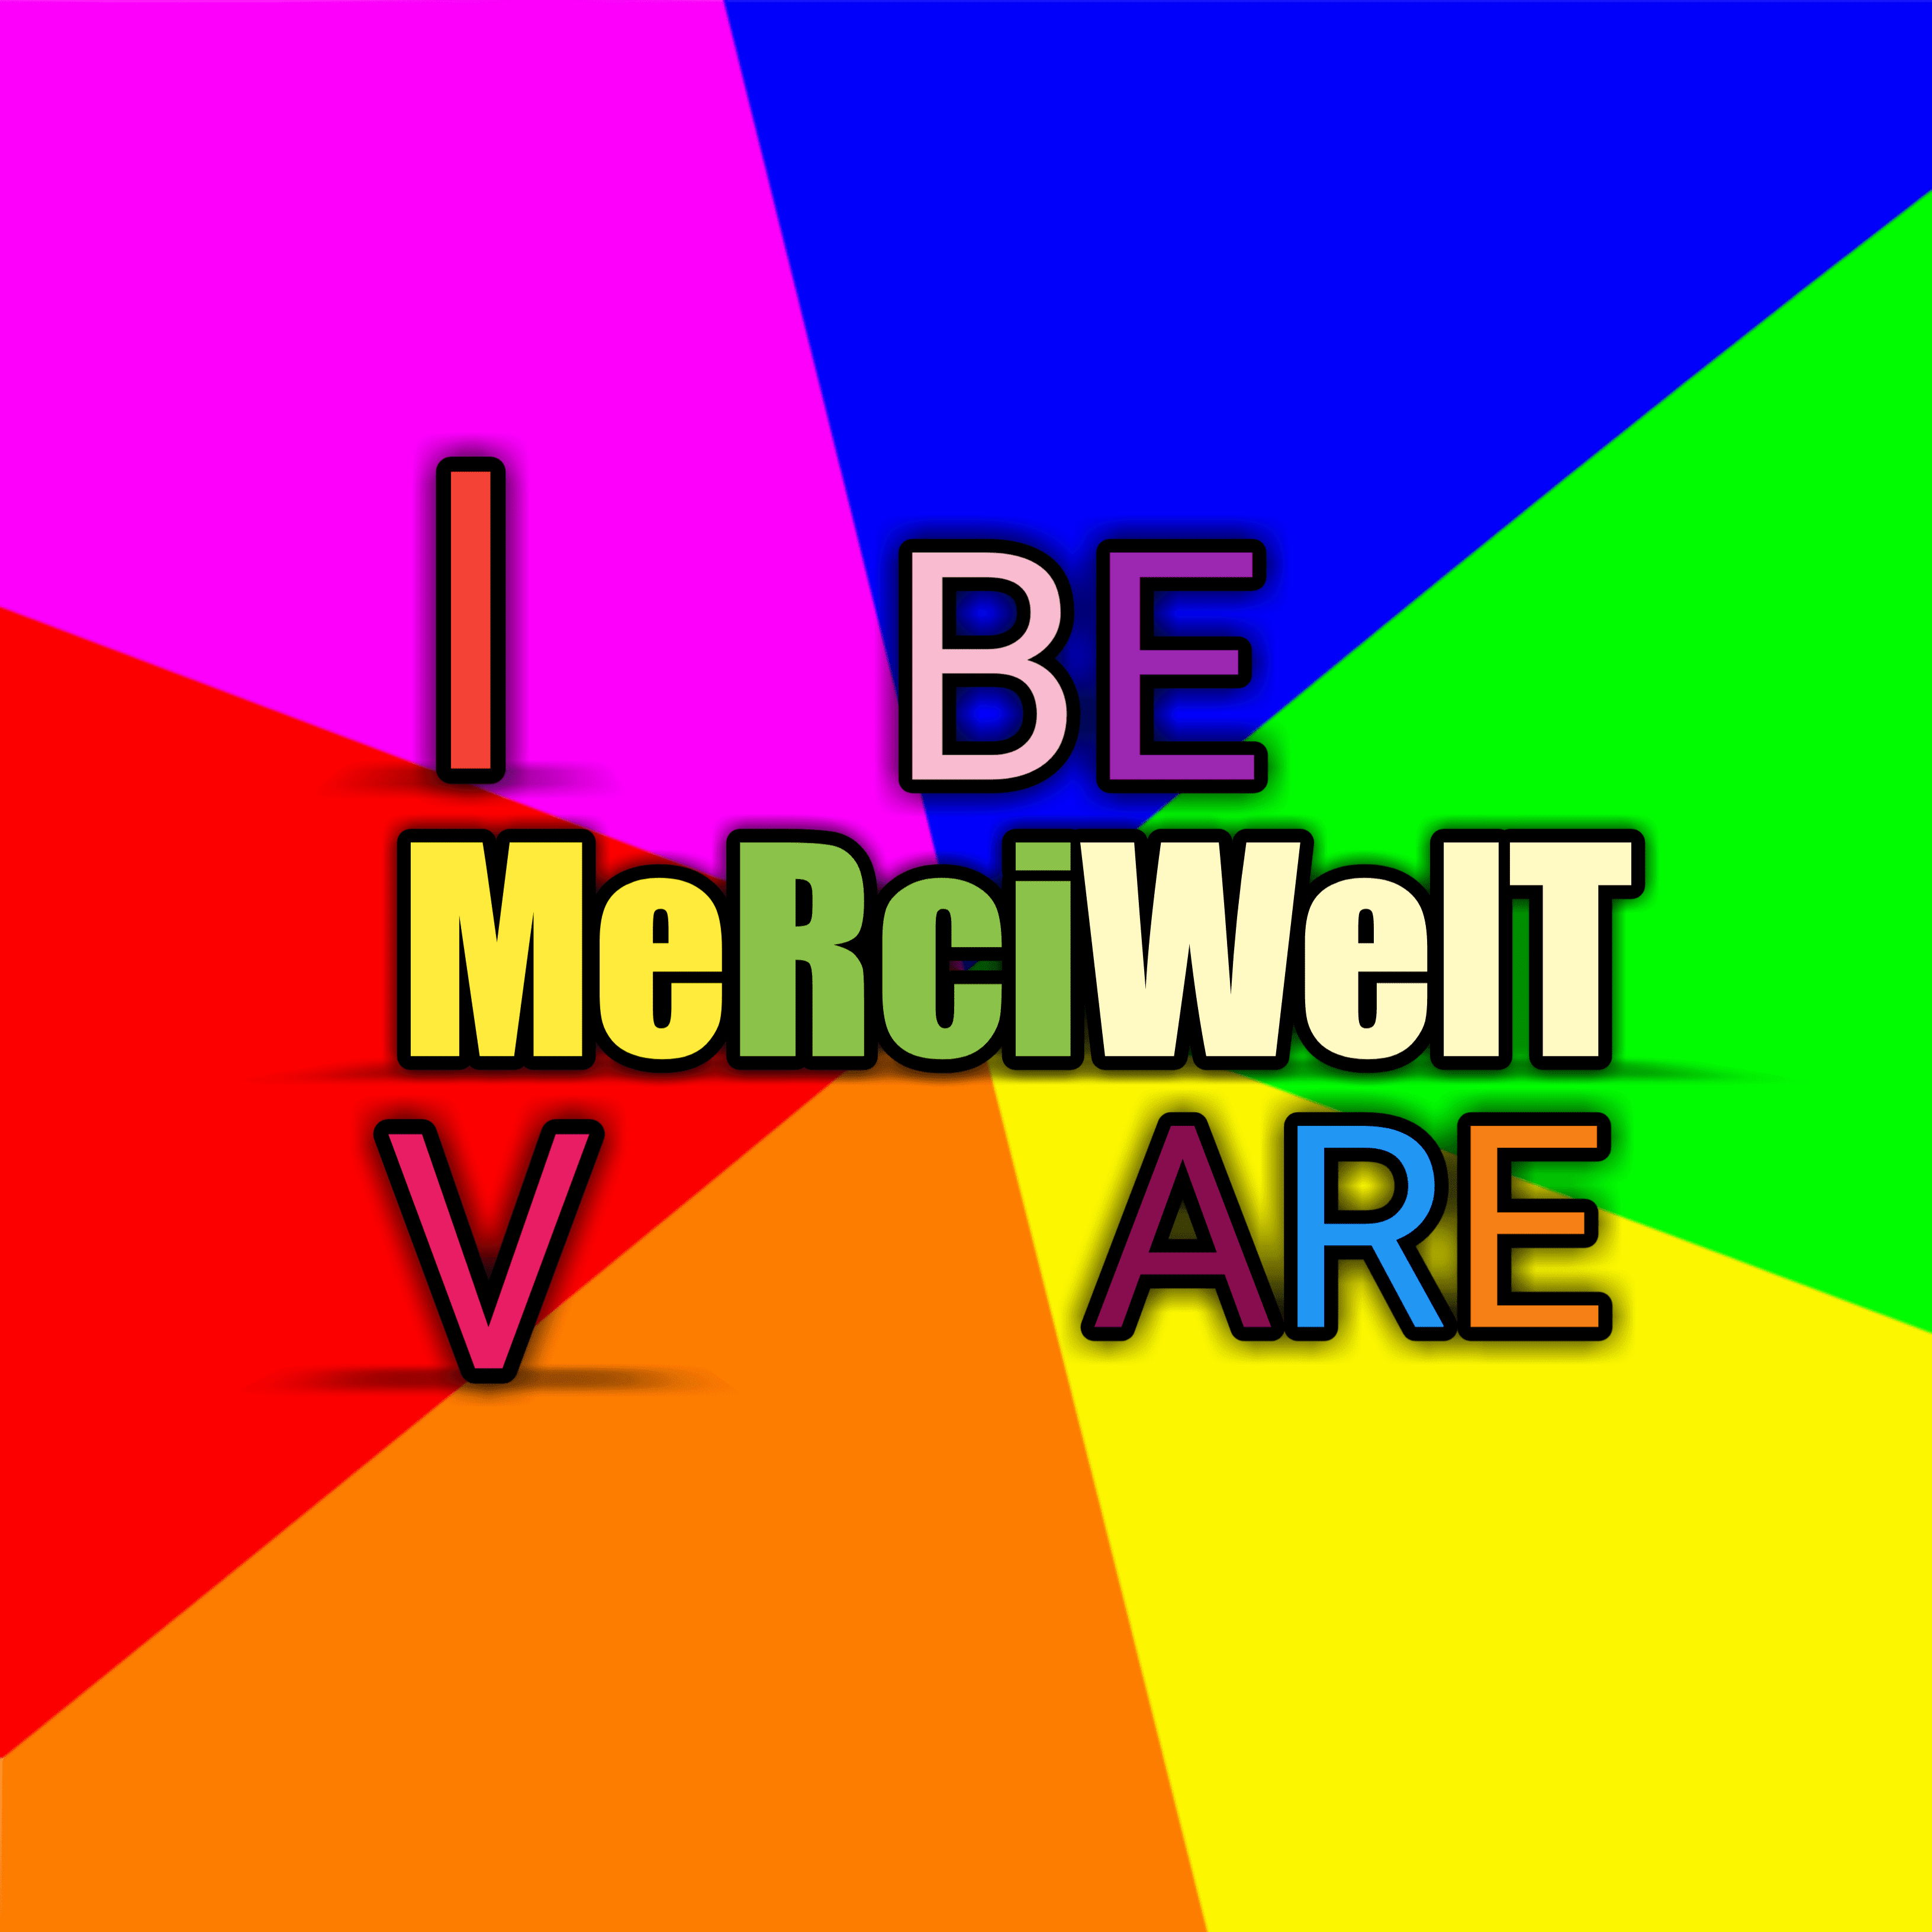 Merciwelt